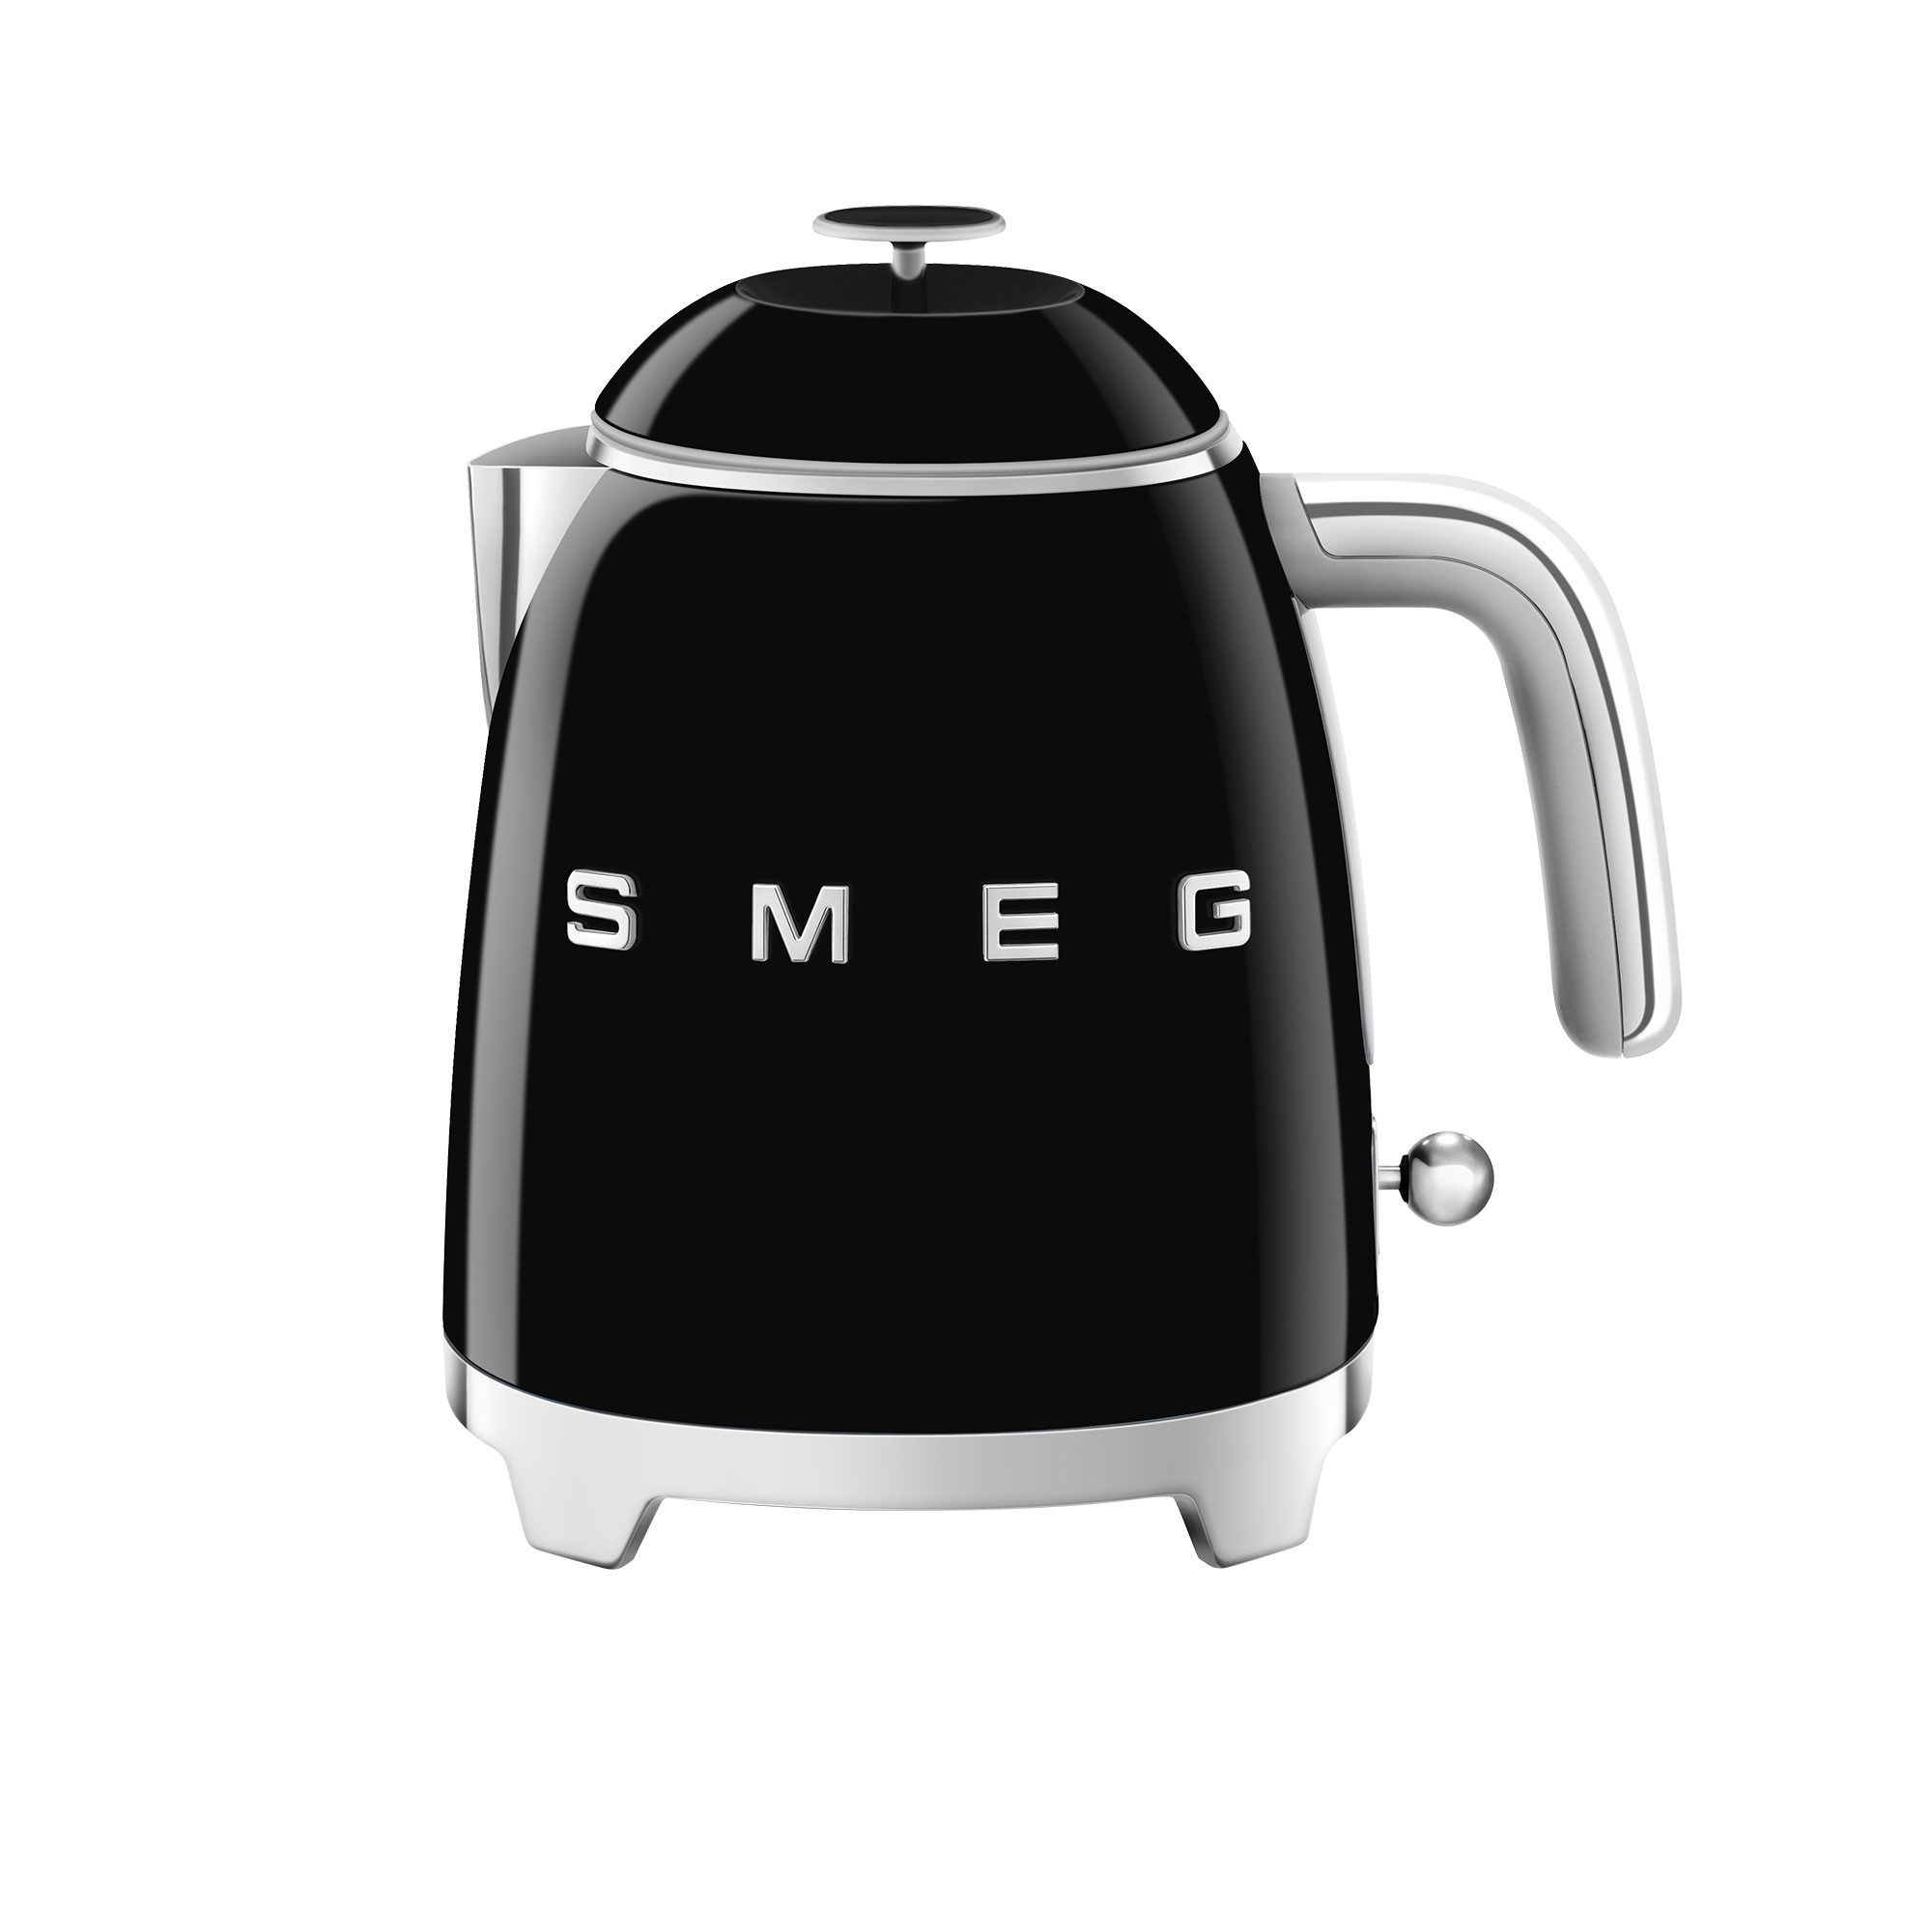 Smeg 50's Retro Style Mini Kettle 800ml Black Image 1